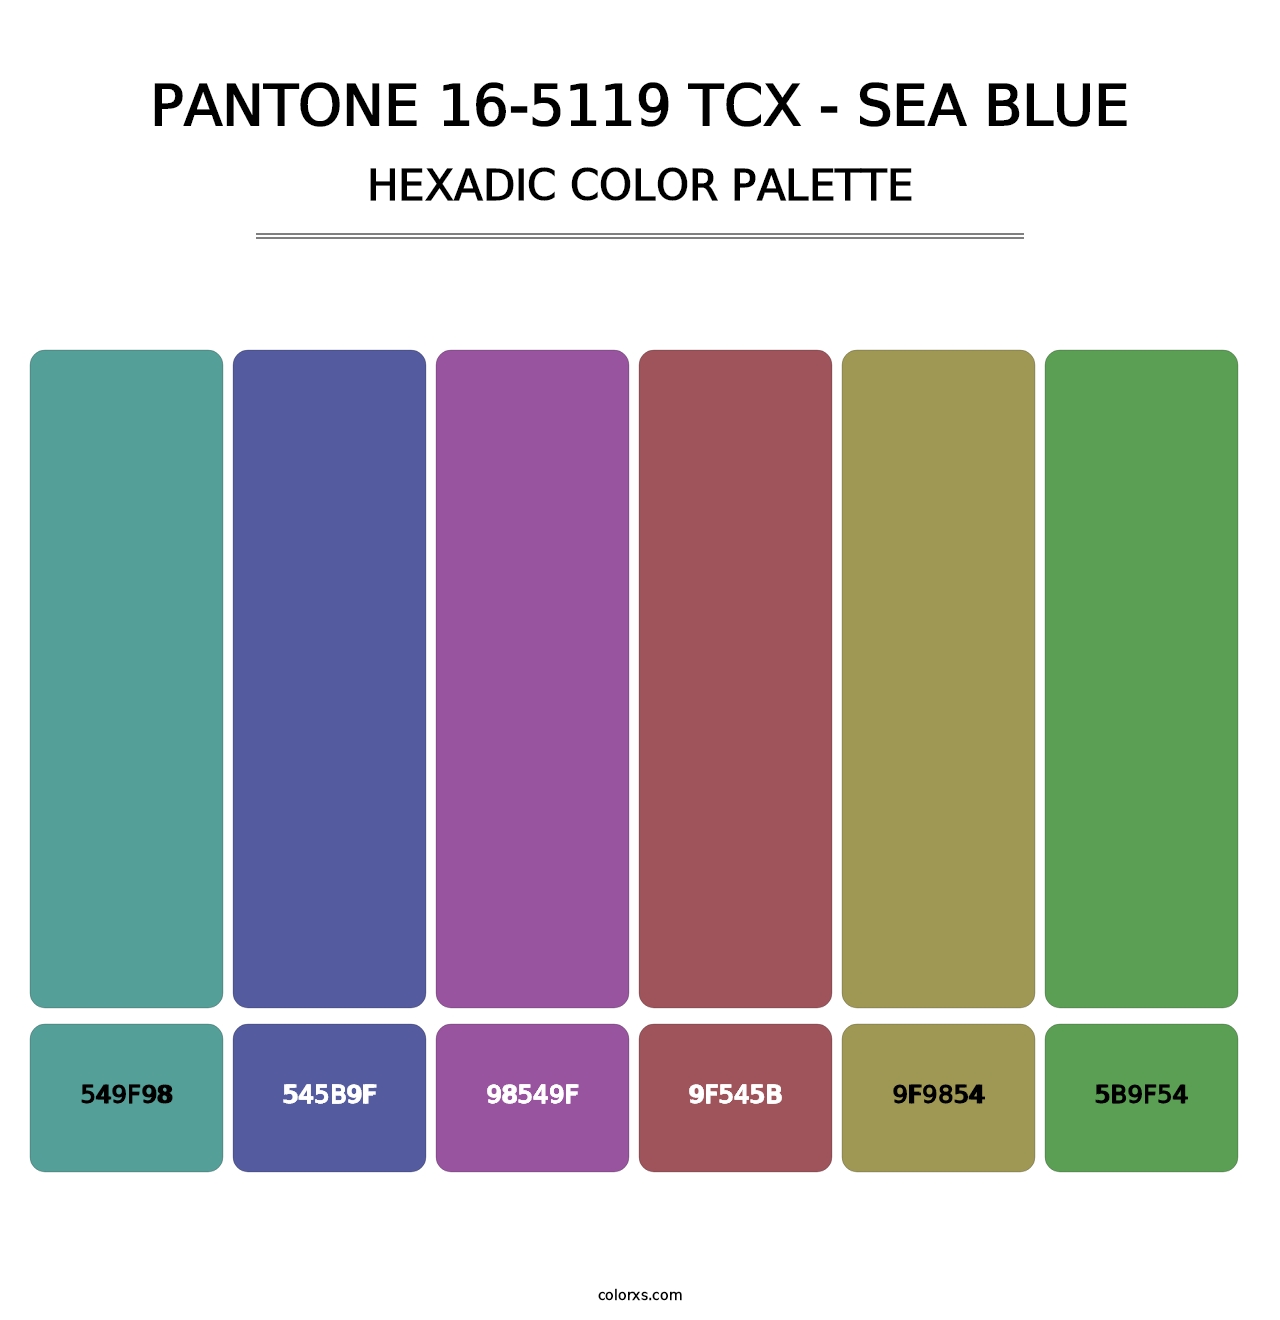 PANTONE 16-5119 TCX - Sea Blue - Hexadic Color Palette